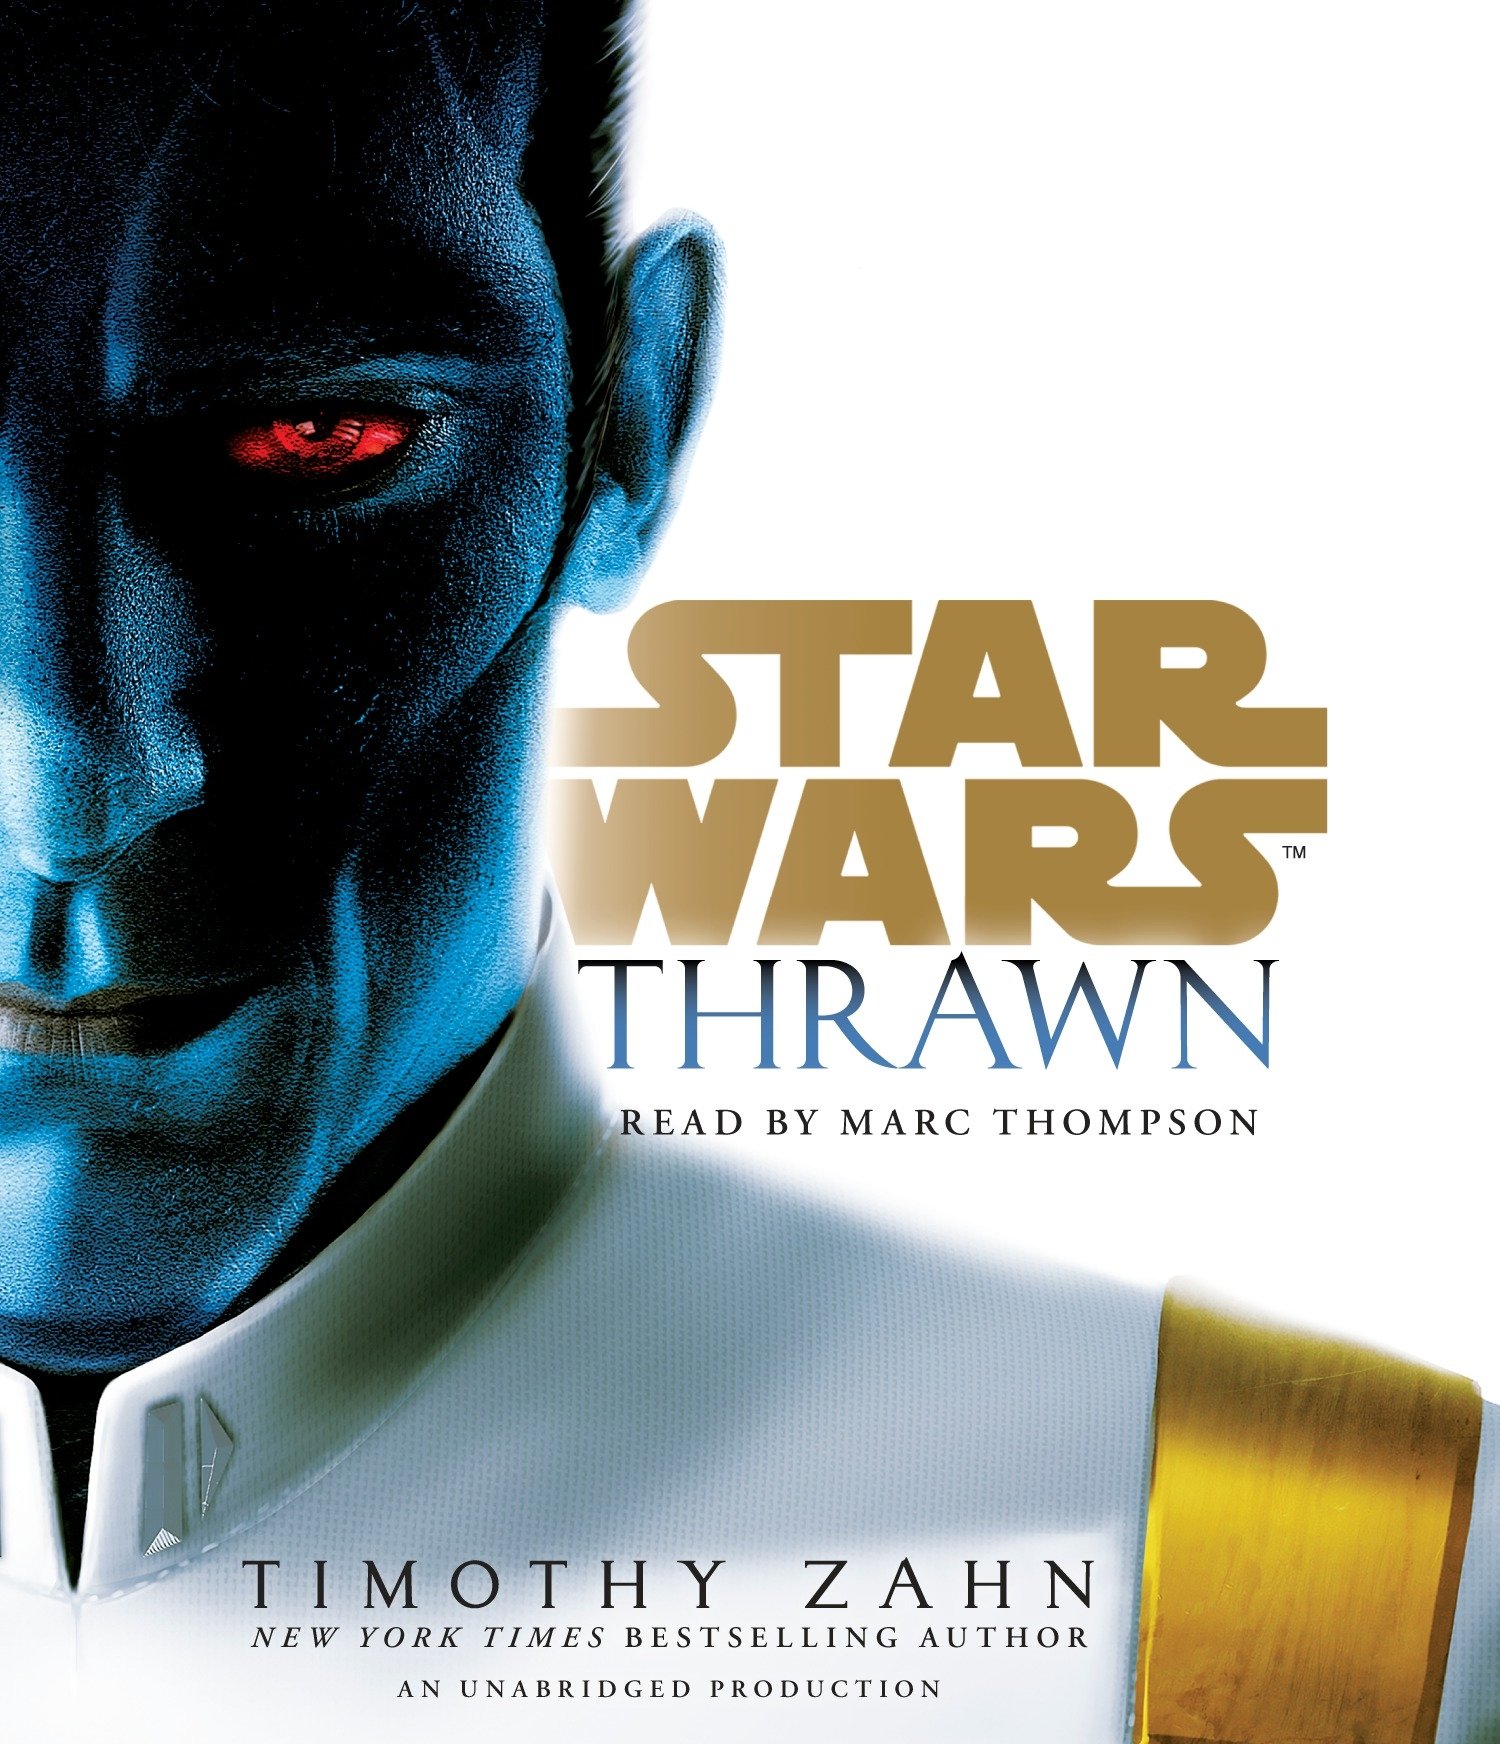 Star Wars - Thrawn | Timothy Zahn